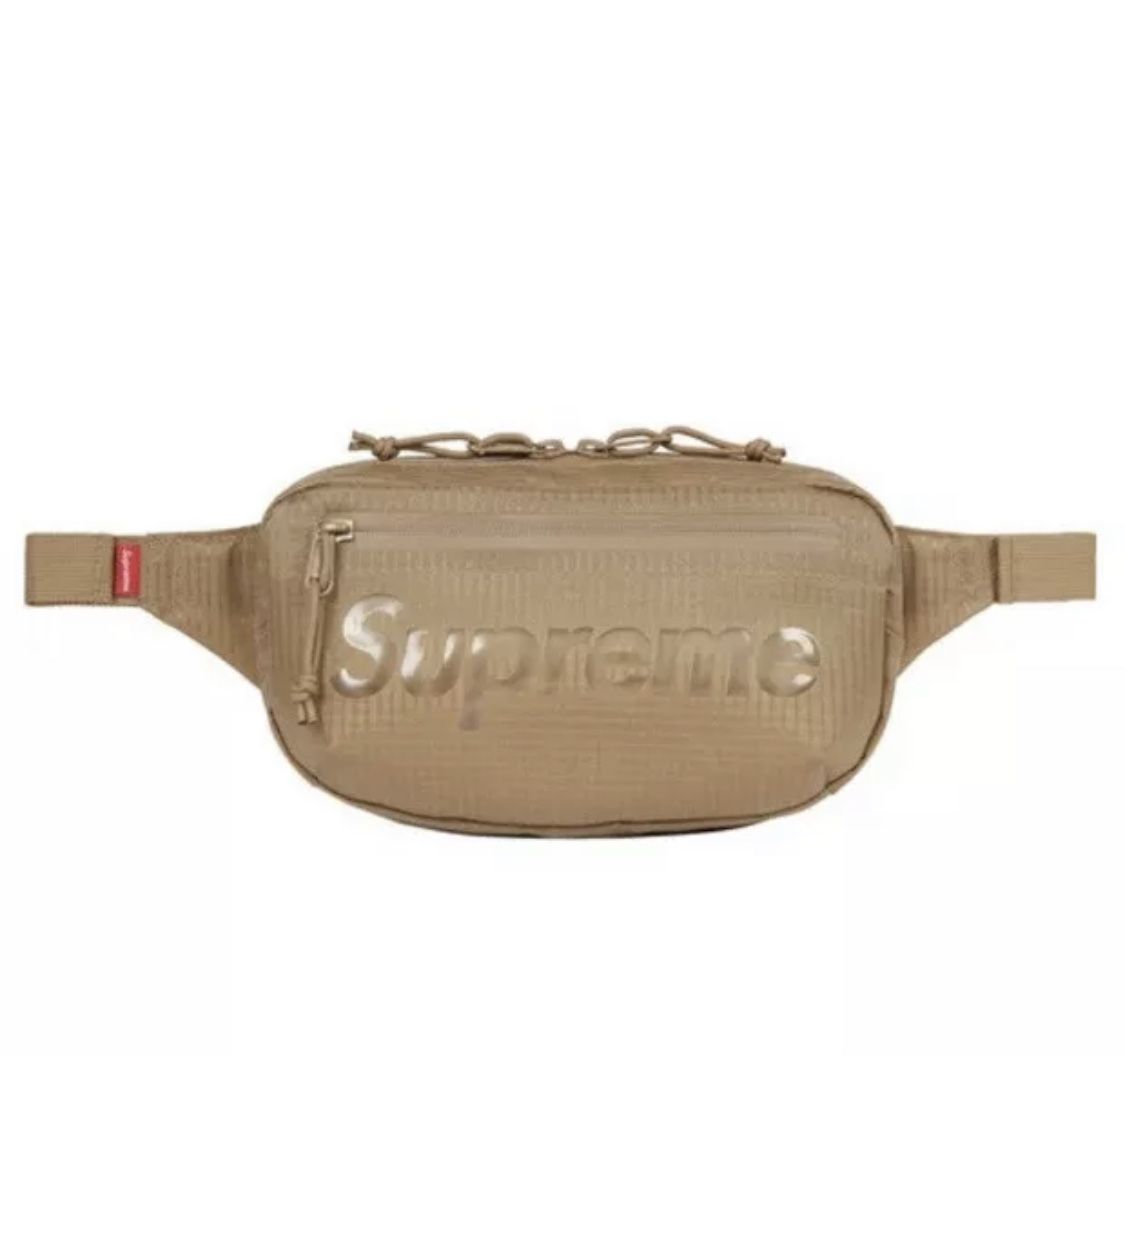 New Sealed Supreme Waist Bag Tan SS21 Sling Gold